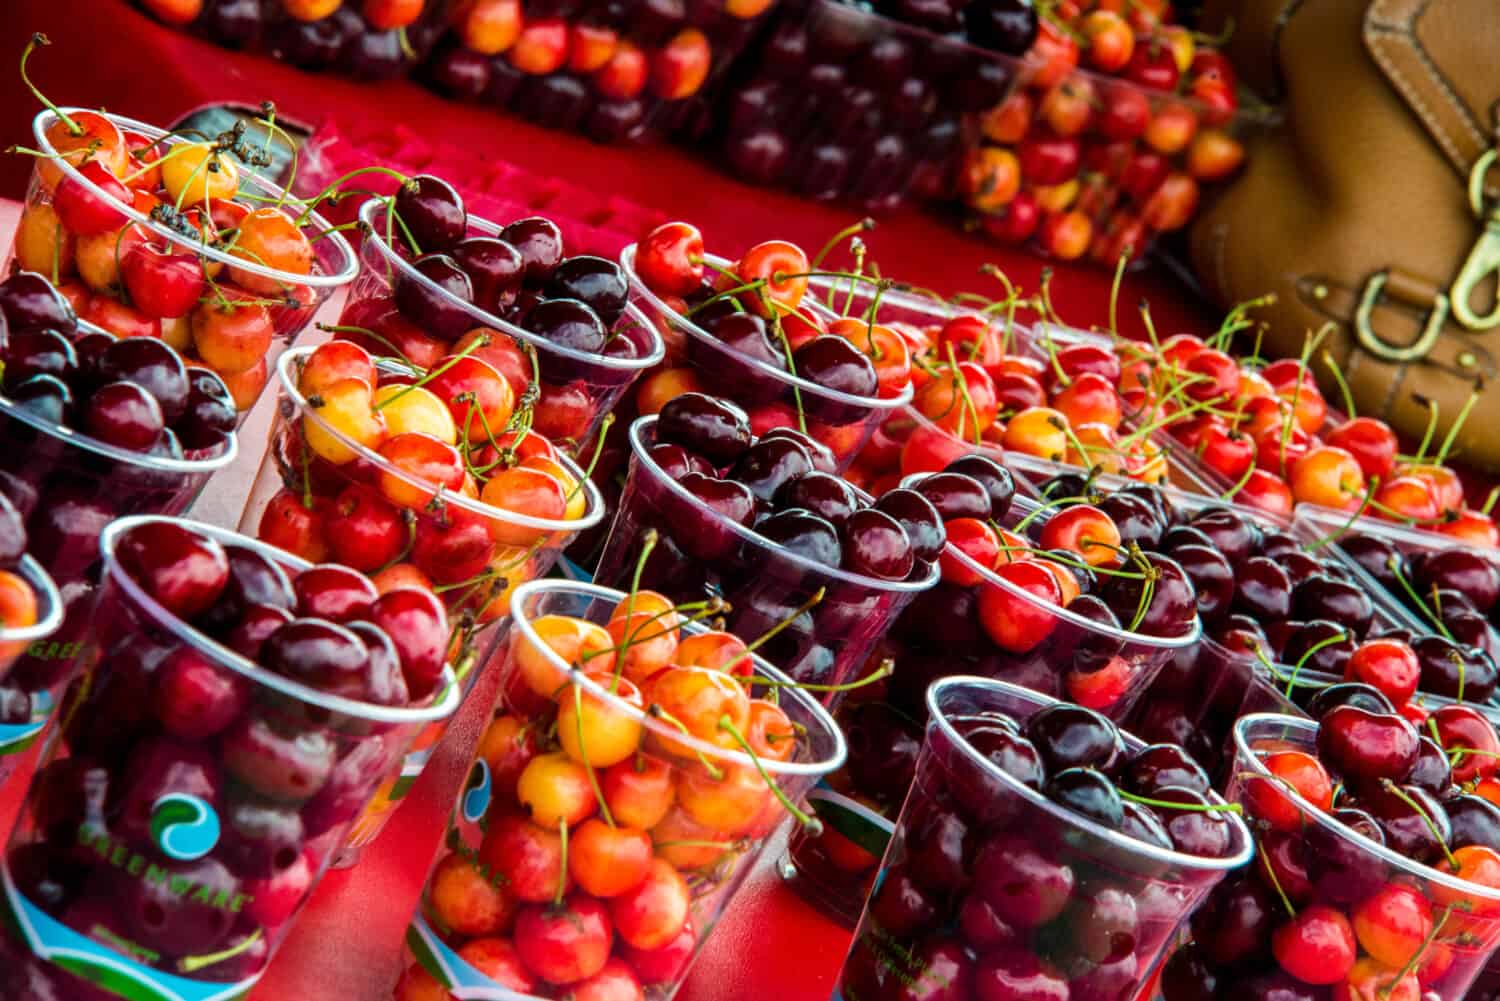 Cups full of Cherries